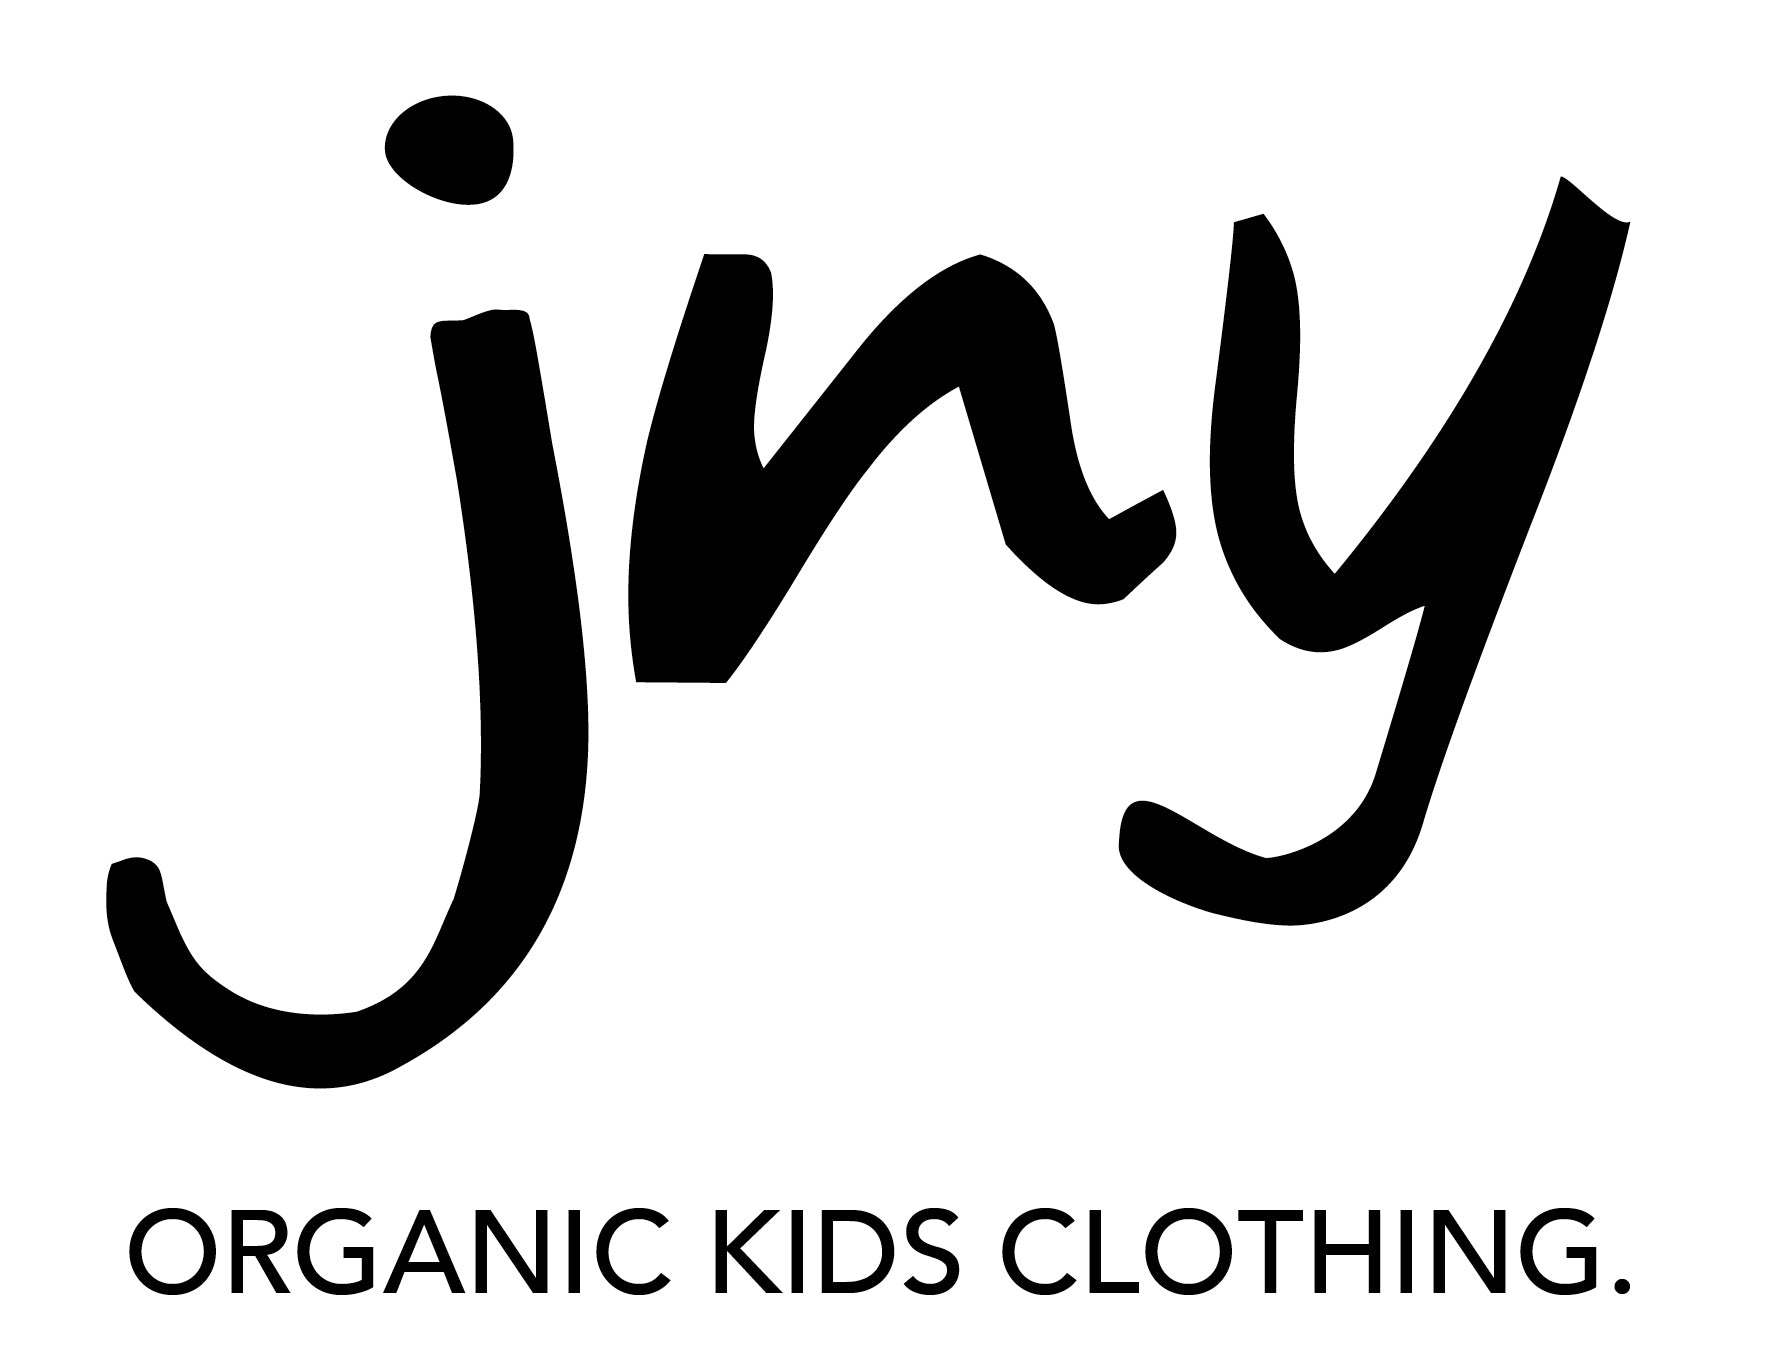 T-shirt Bumblebee - JNY Kids